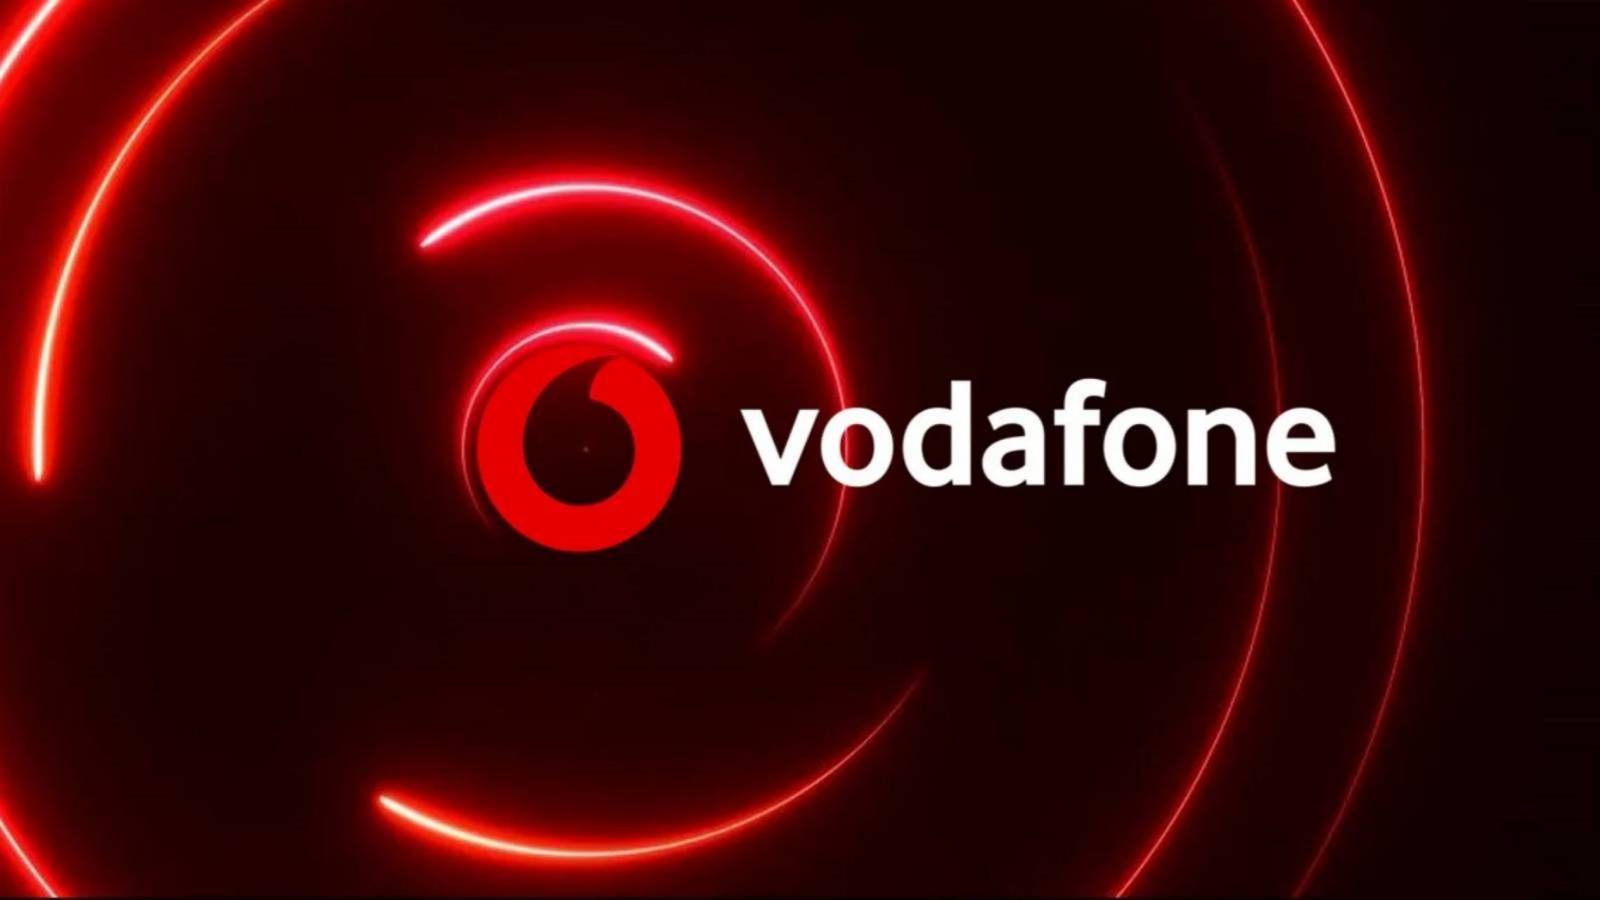 Vodafone leverans